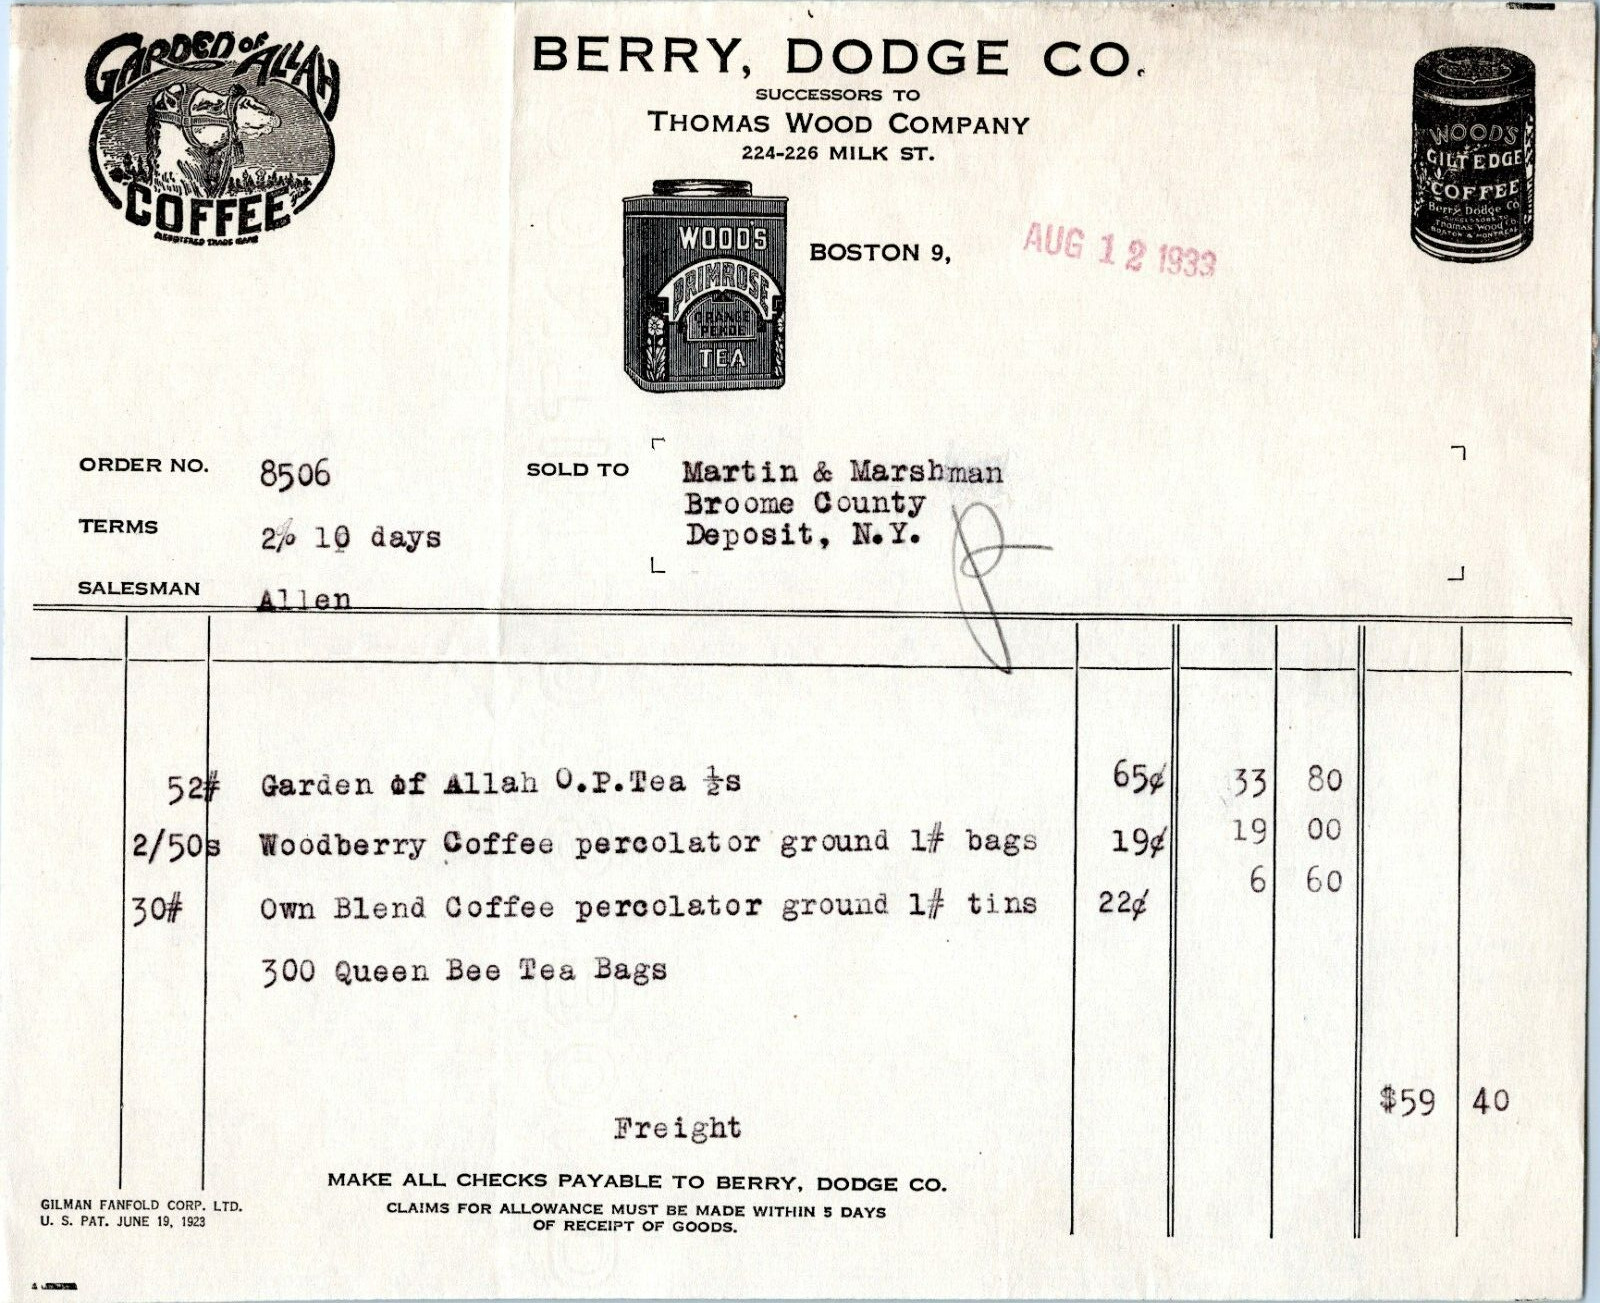 Billhead - Berry Dodge Company, Boston, MA - 1933- for Coffee grounds, Tea bags